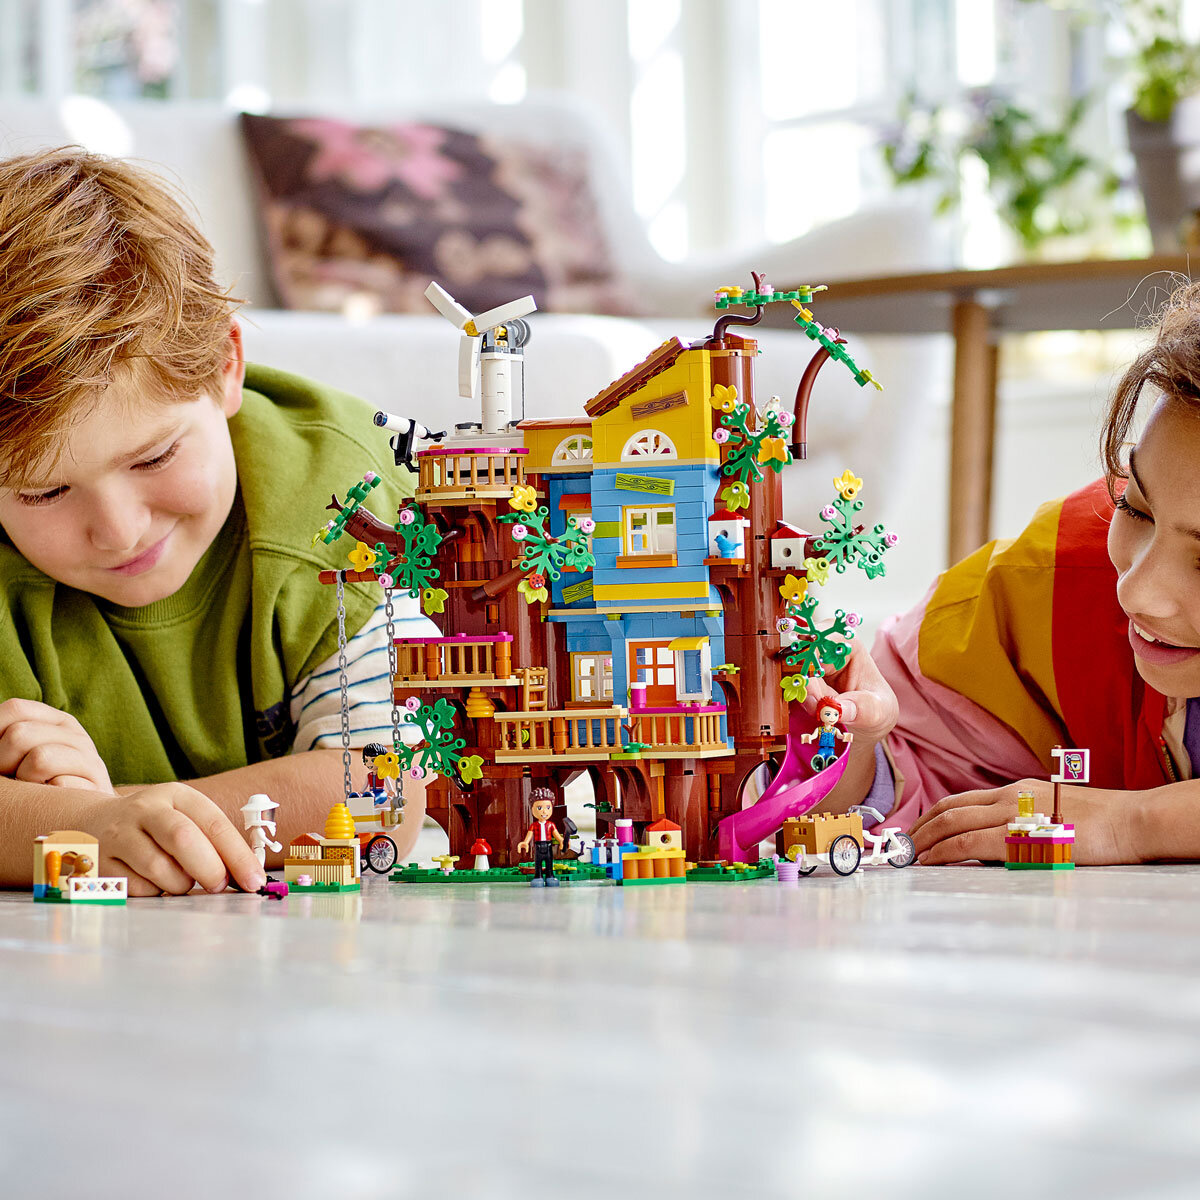 Buy LEGO Friends Friendship Tree House Lifestyle Image at Costco.co.uk